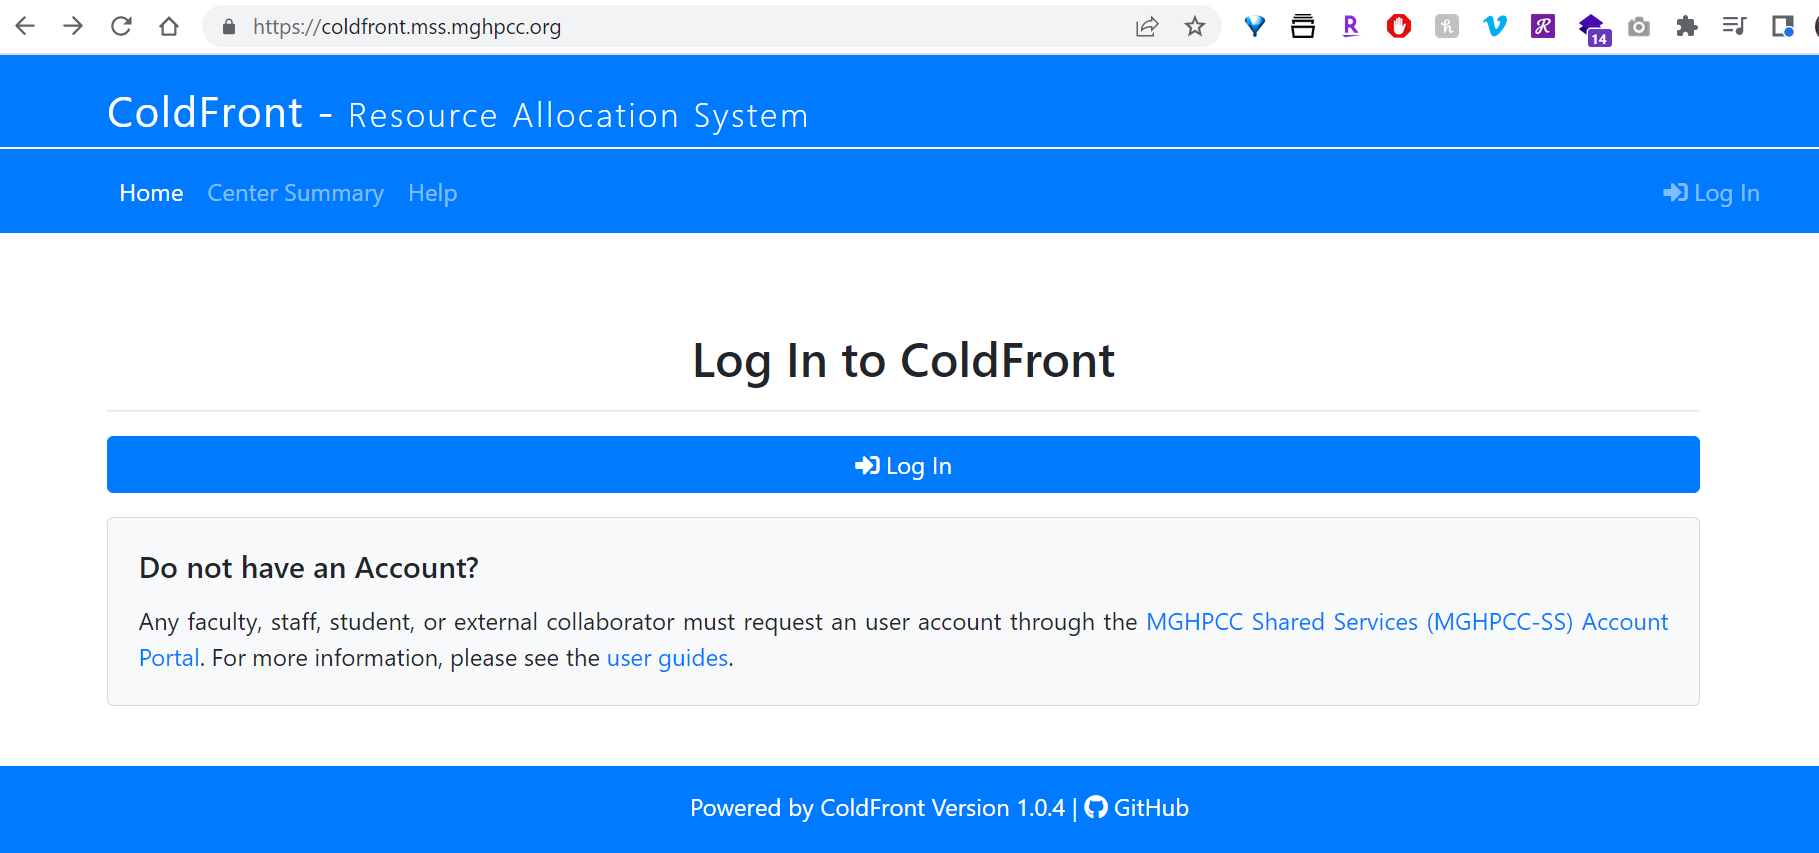 ColdFront Login Page